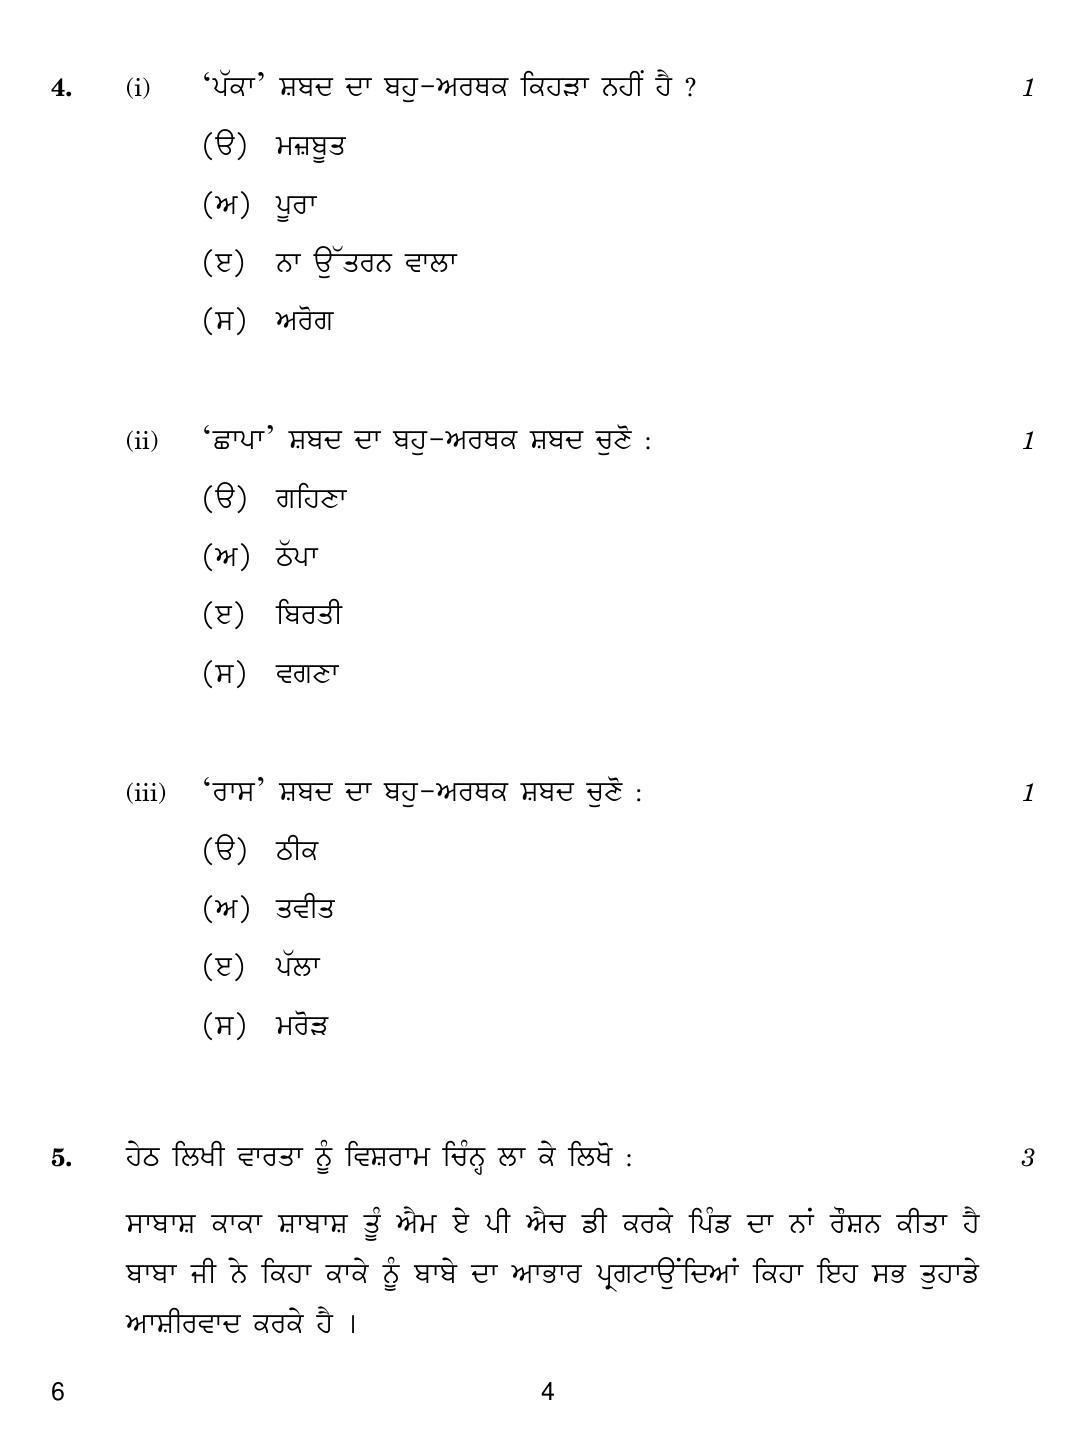 CBSE Class 10 6 Punjabi 2019 Compartment Question Paper - Page 4